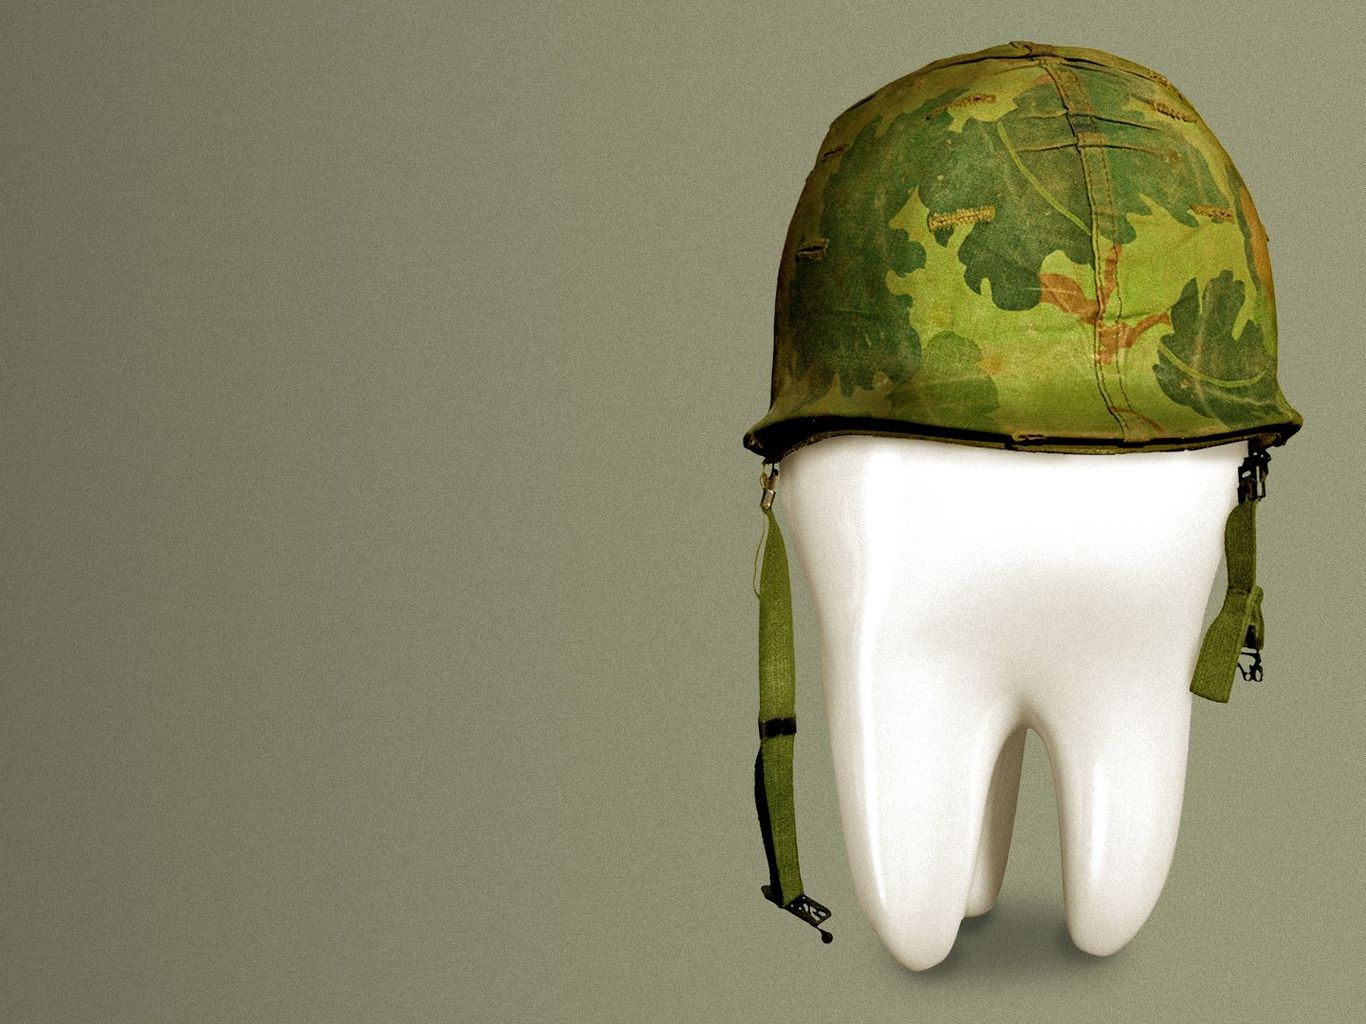 Aligners v. braces: Invisalign, SmileDirectClub take on orthodontists